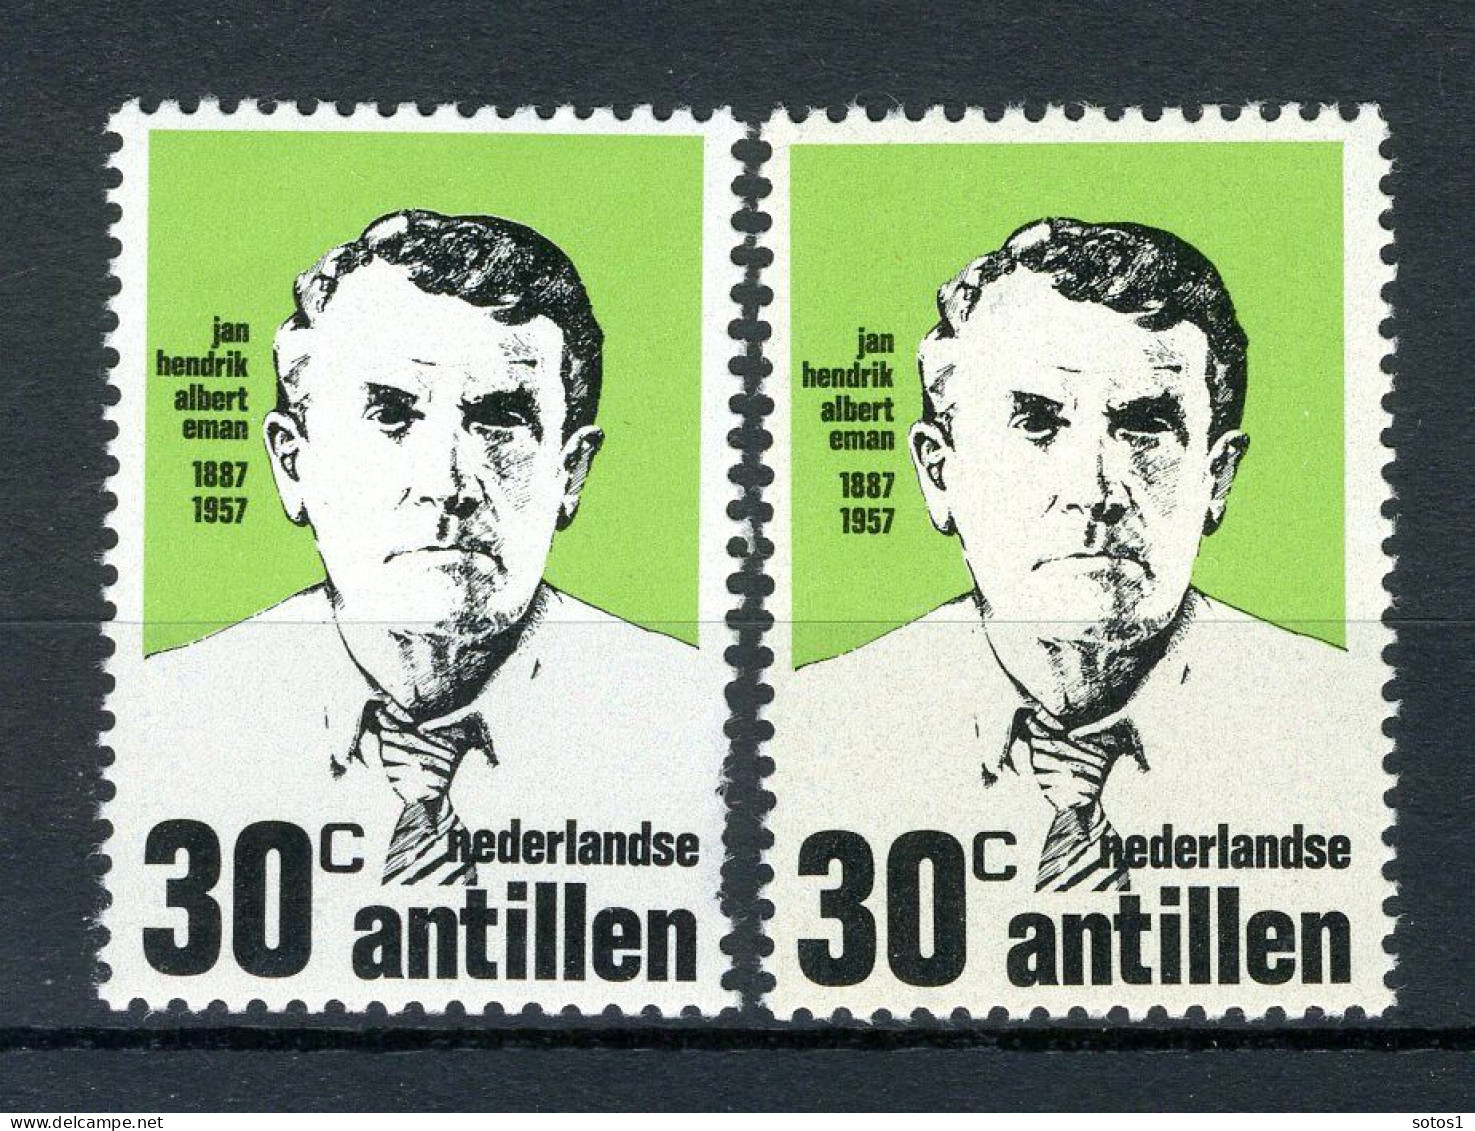 NL. ANTILLEN 480 MNH 1973 - Jan Hendrik Albert Eman, Politicus. (2 Stuks) - Curaçao, Antilles Neérlandaises, Aruba